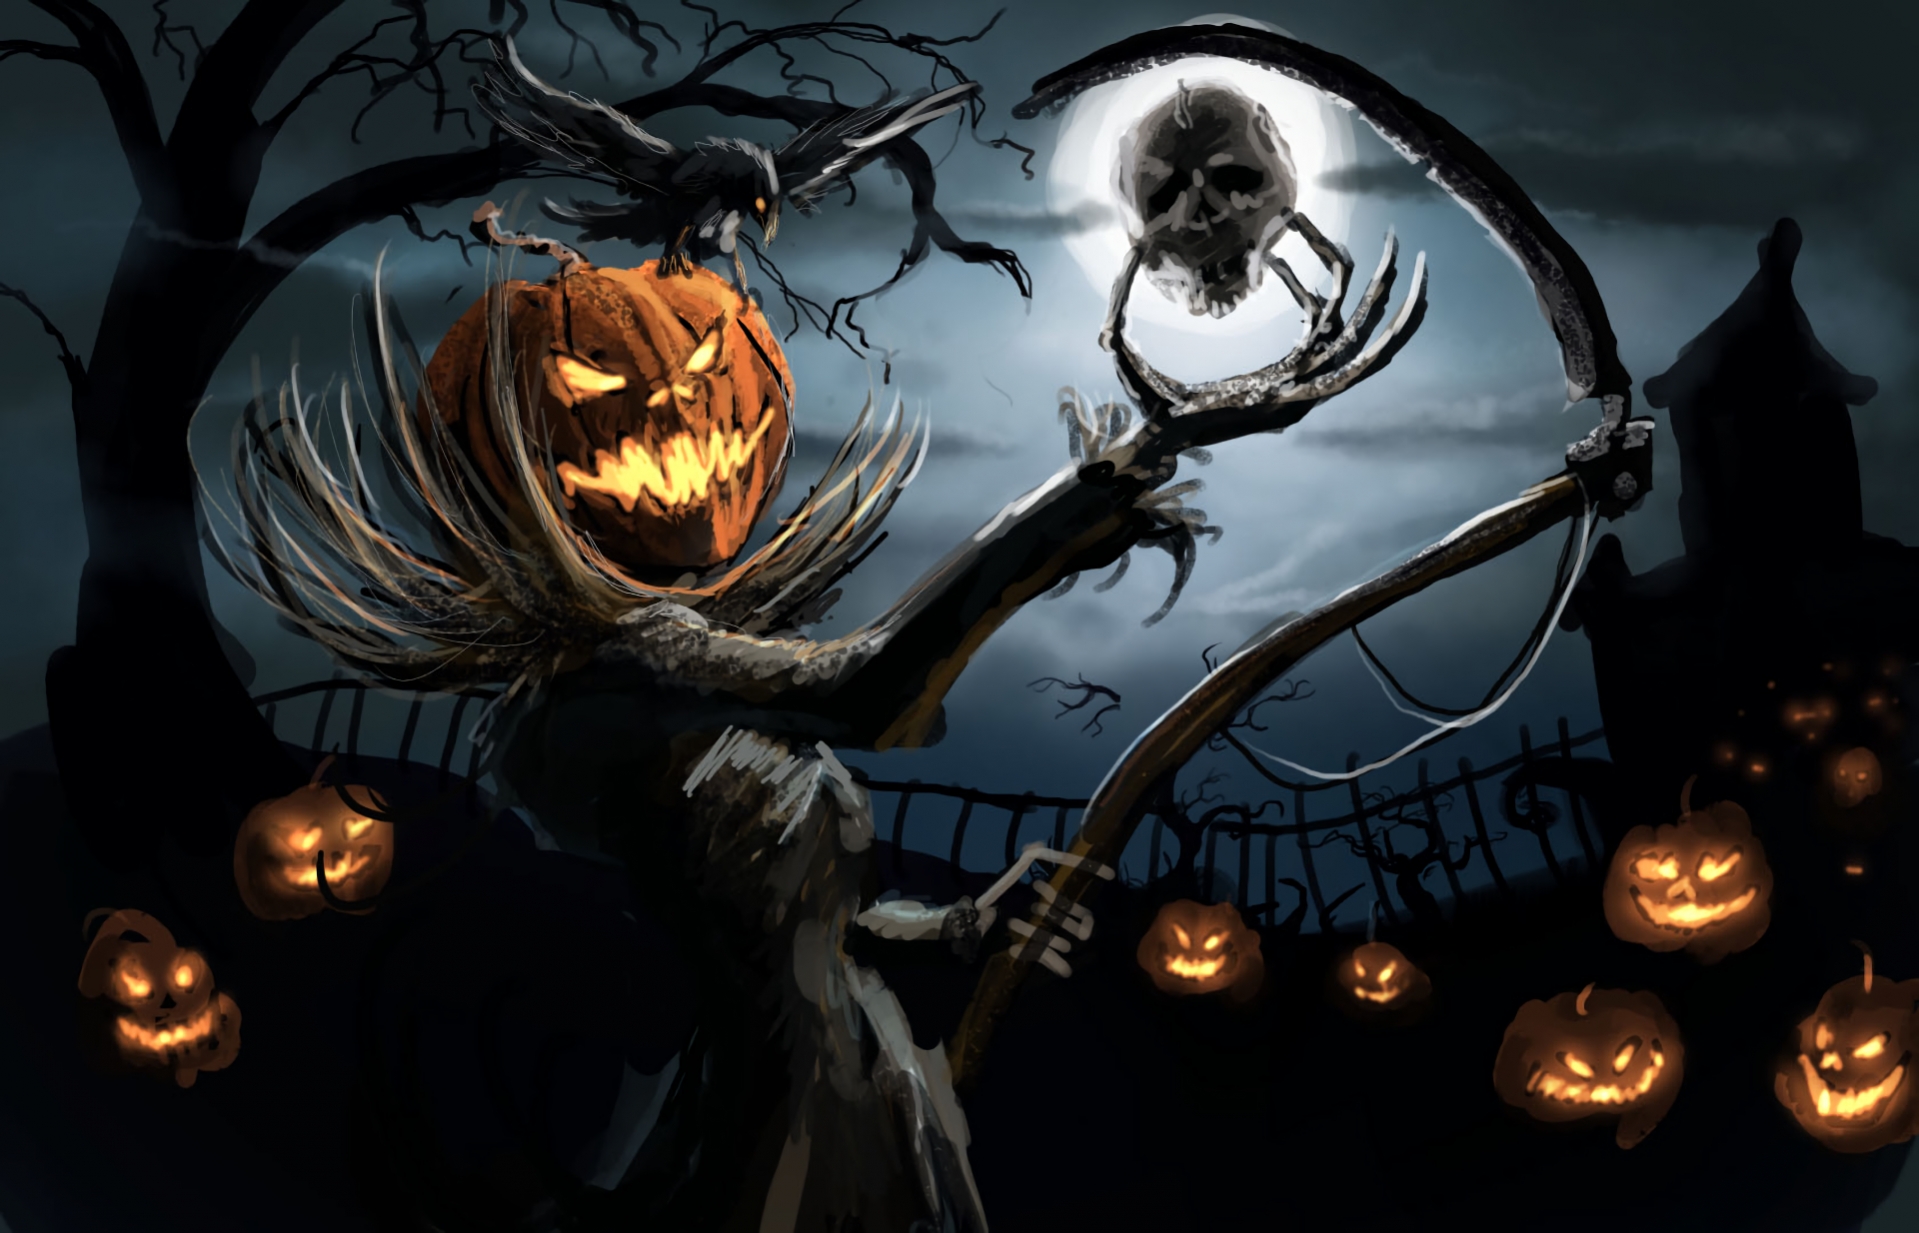 10 Top Free Scary Halloween Wallpaper FULL HD 1920×1080 For PC Desktop 2021